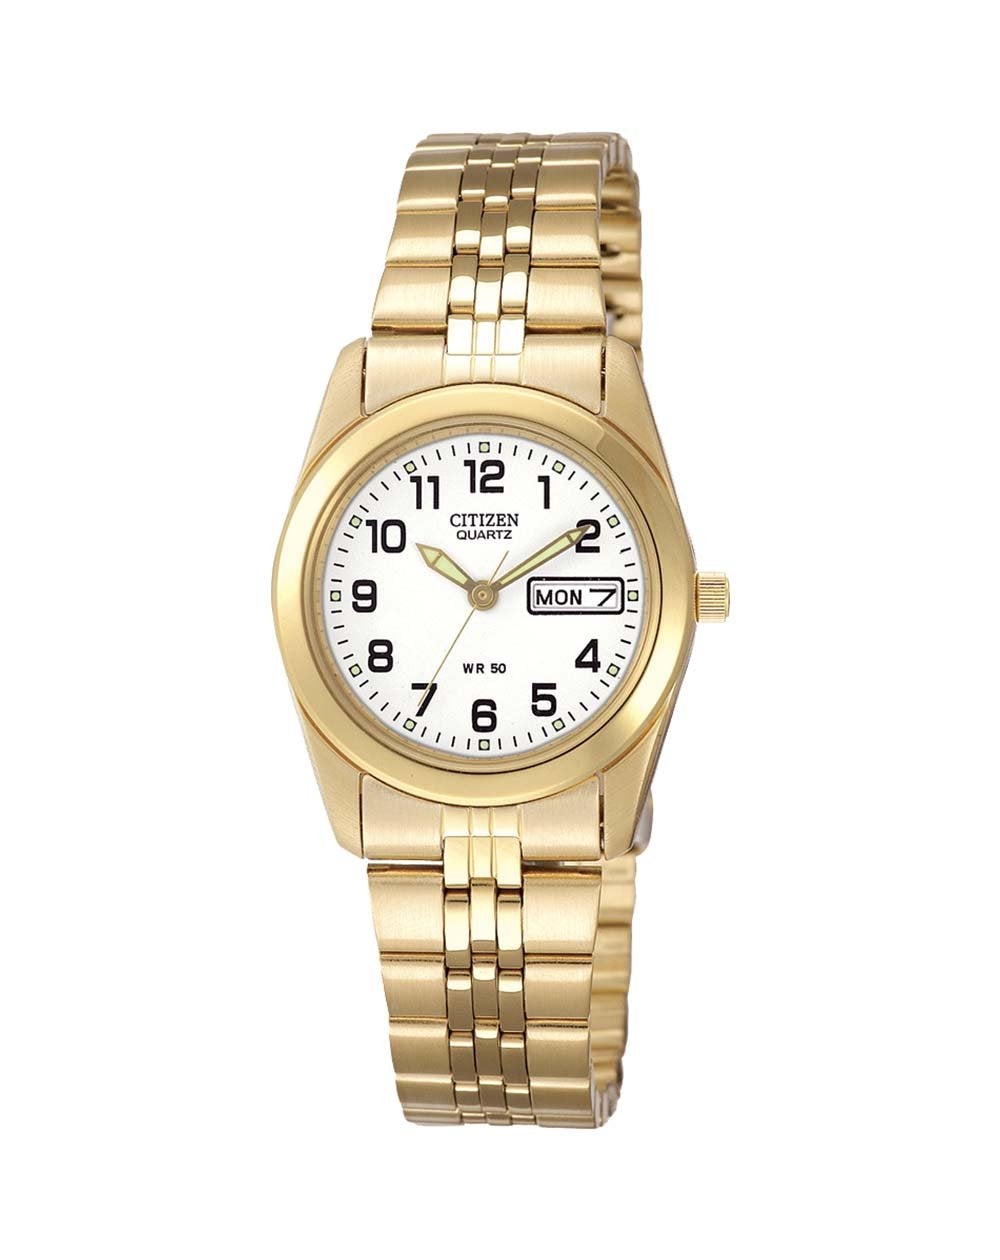 Citizen women's quartz analogue dress watch in gold tone